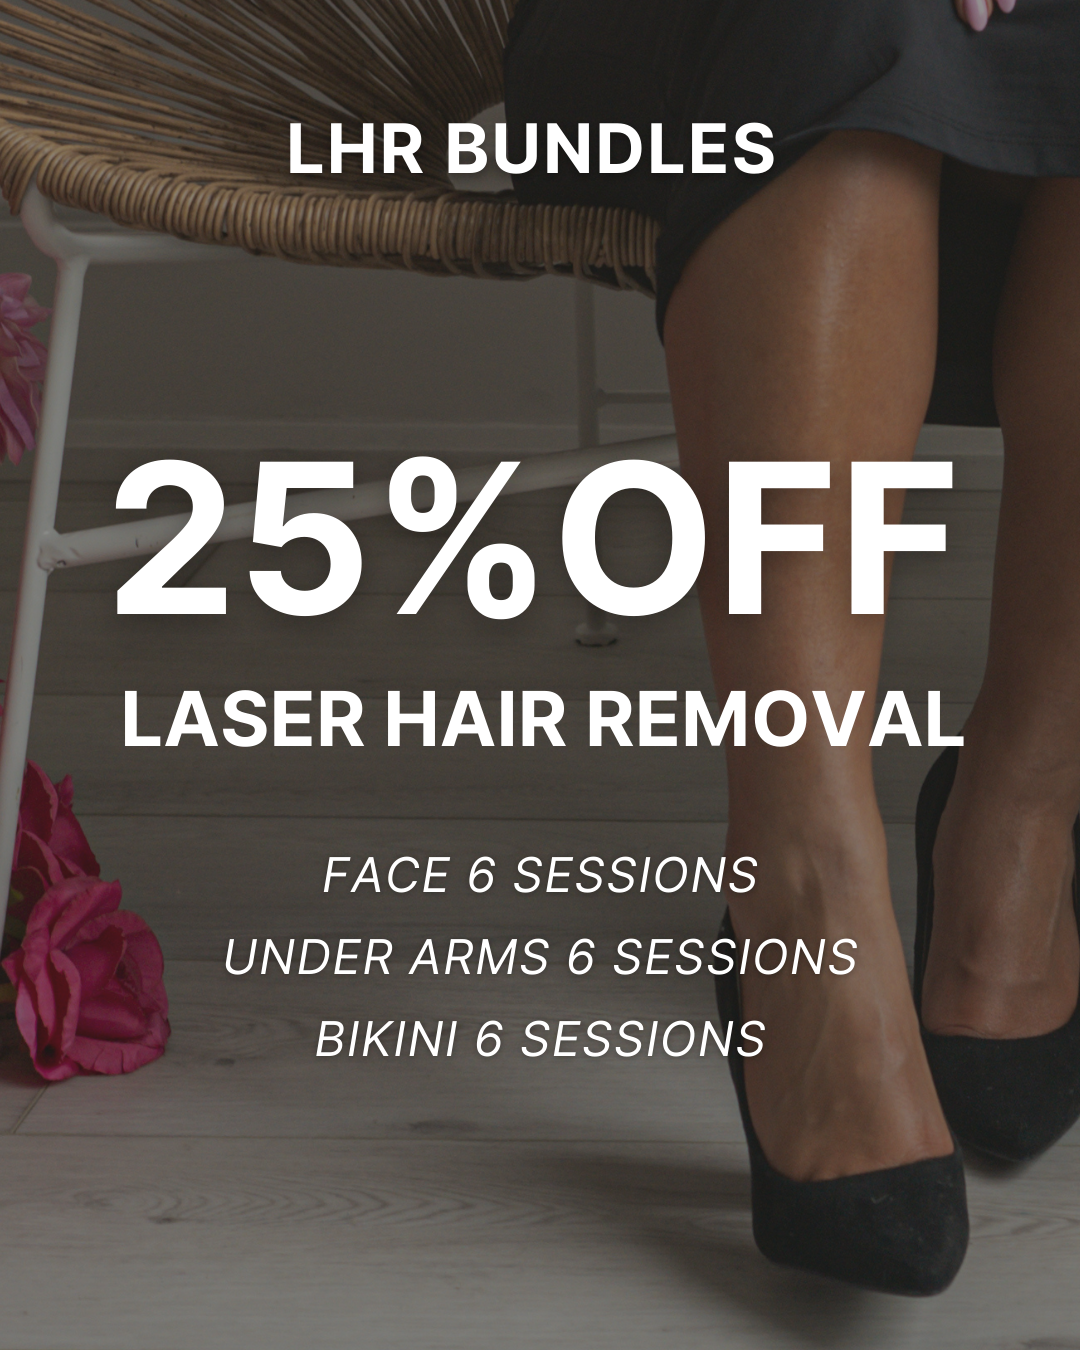 laser hair removal promotion in burlington